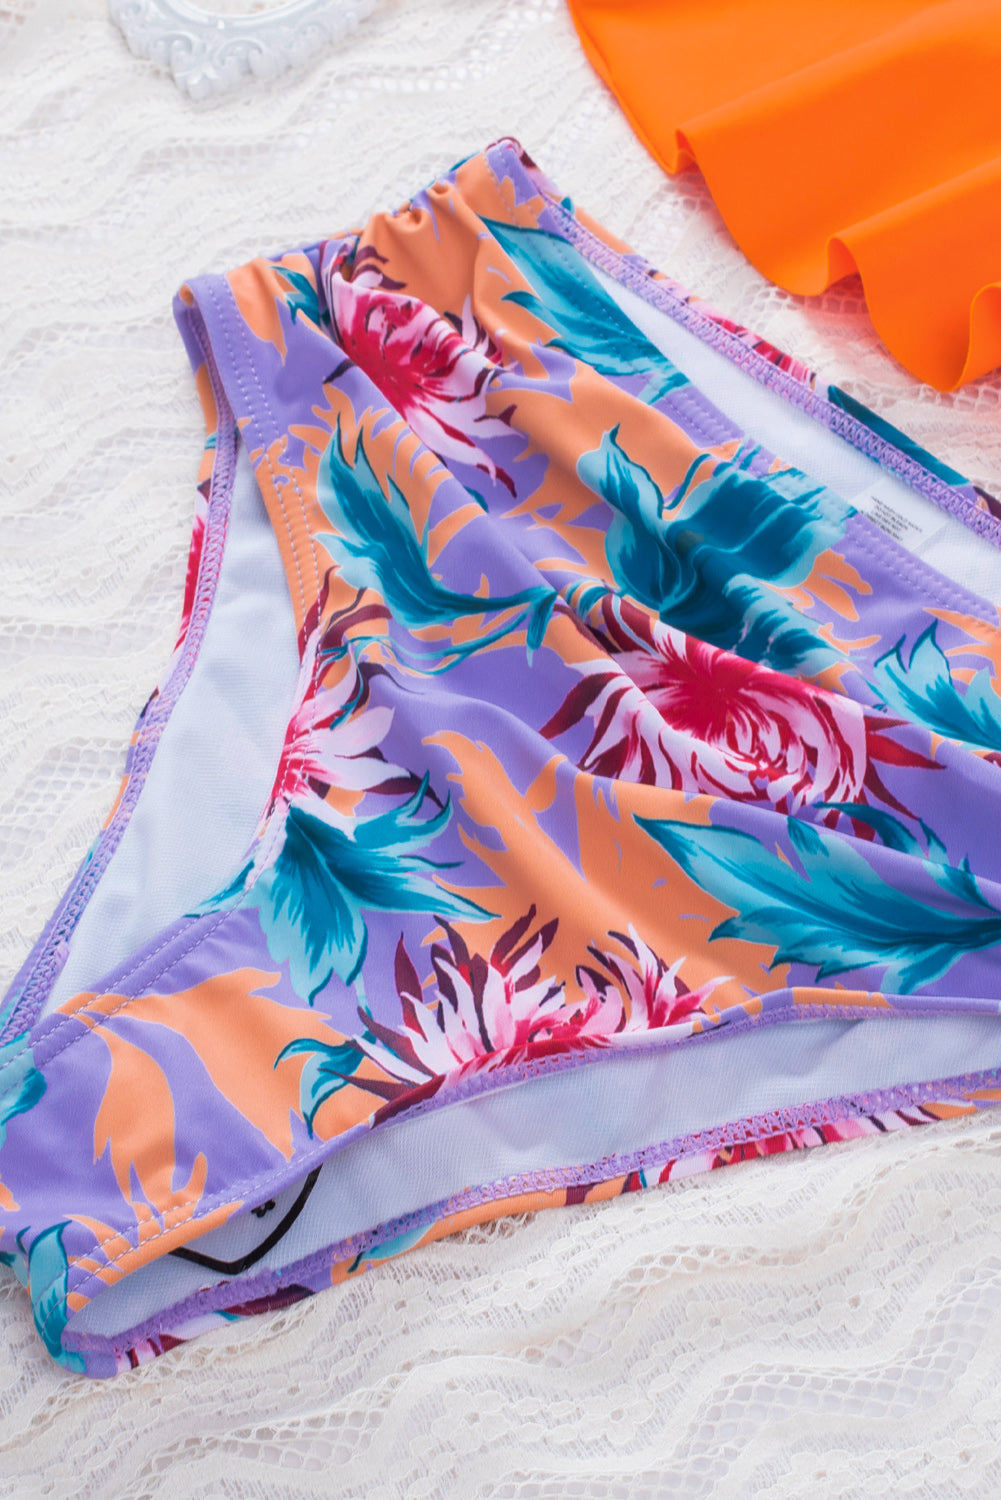 Floral Print Ruffled Criss Cross Spaghetti Strap Bikini Swimsuit